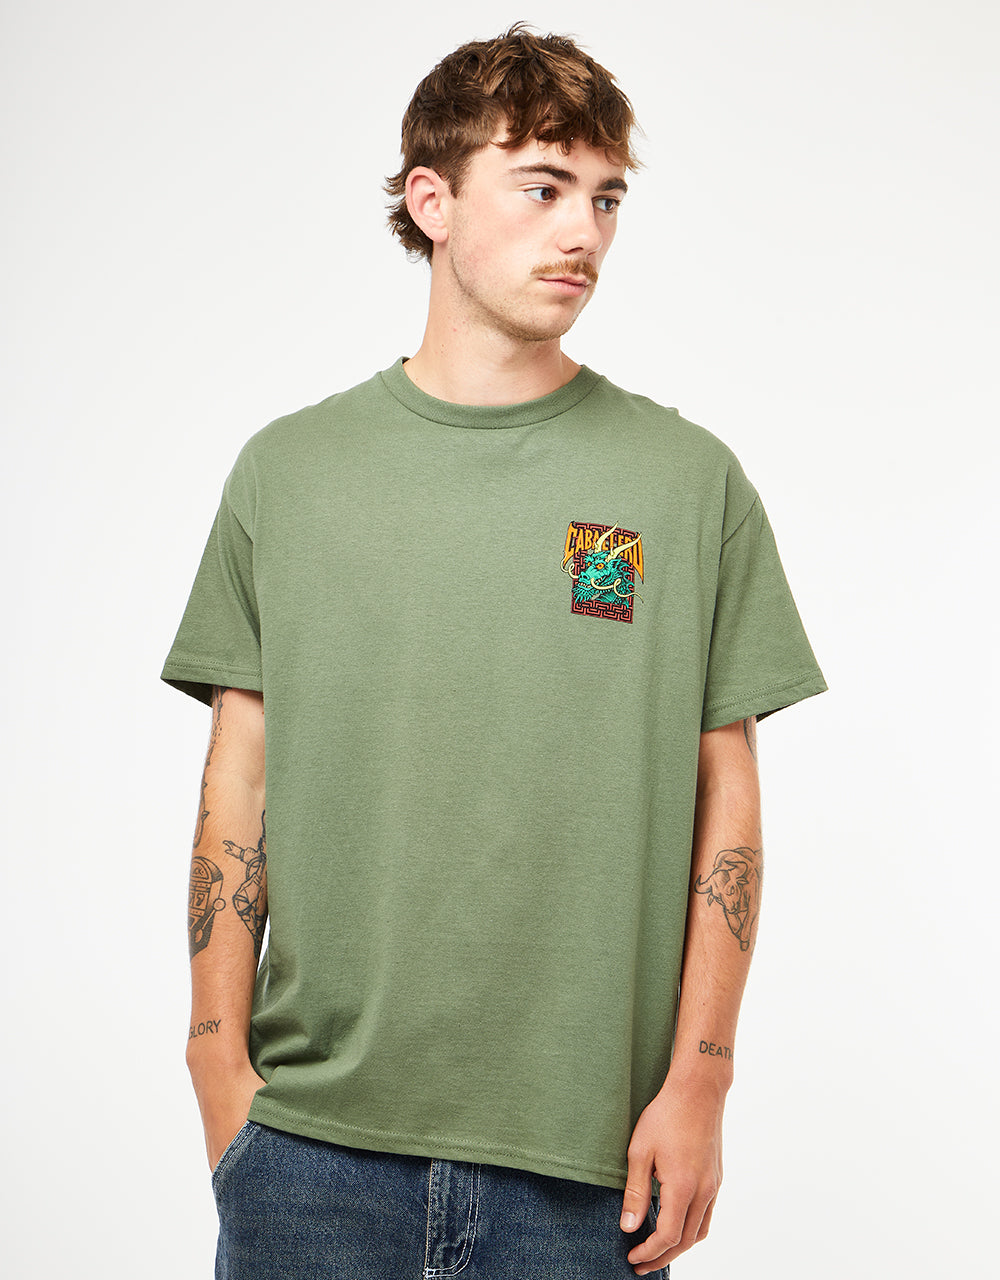 Powell Peralta Caballero Street Dragon T-Shirt - Military Green